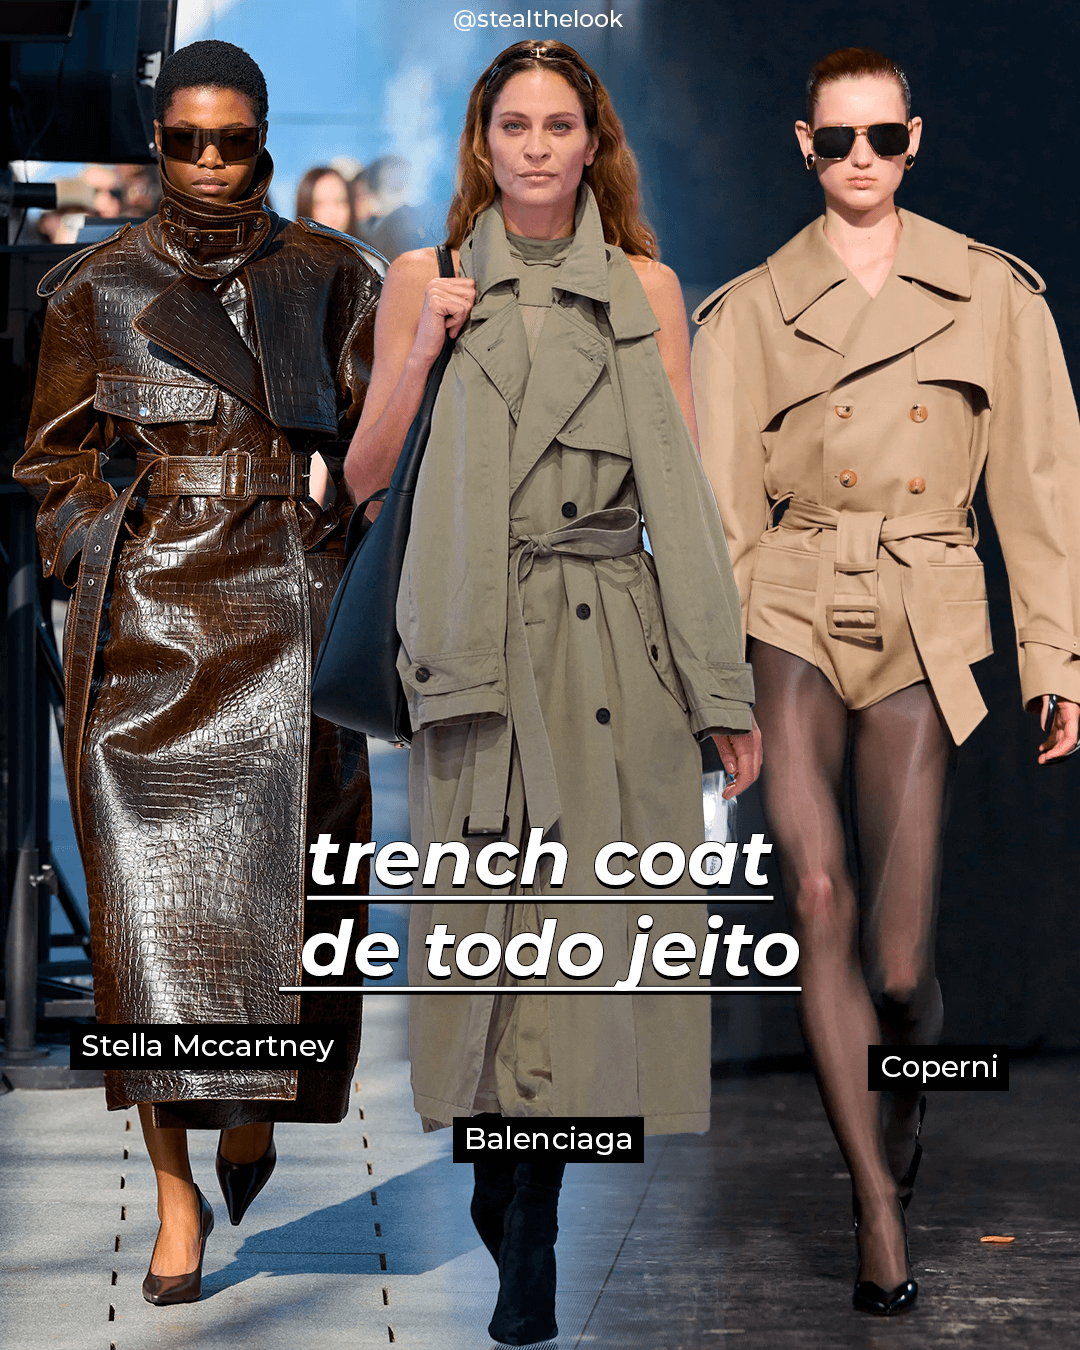 Stella McCartney, Balenciaga e Coperni - trench coat - trench coat - Inverno - Paris - https://stealthelook.com.br